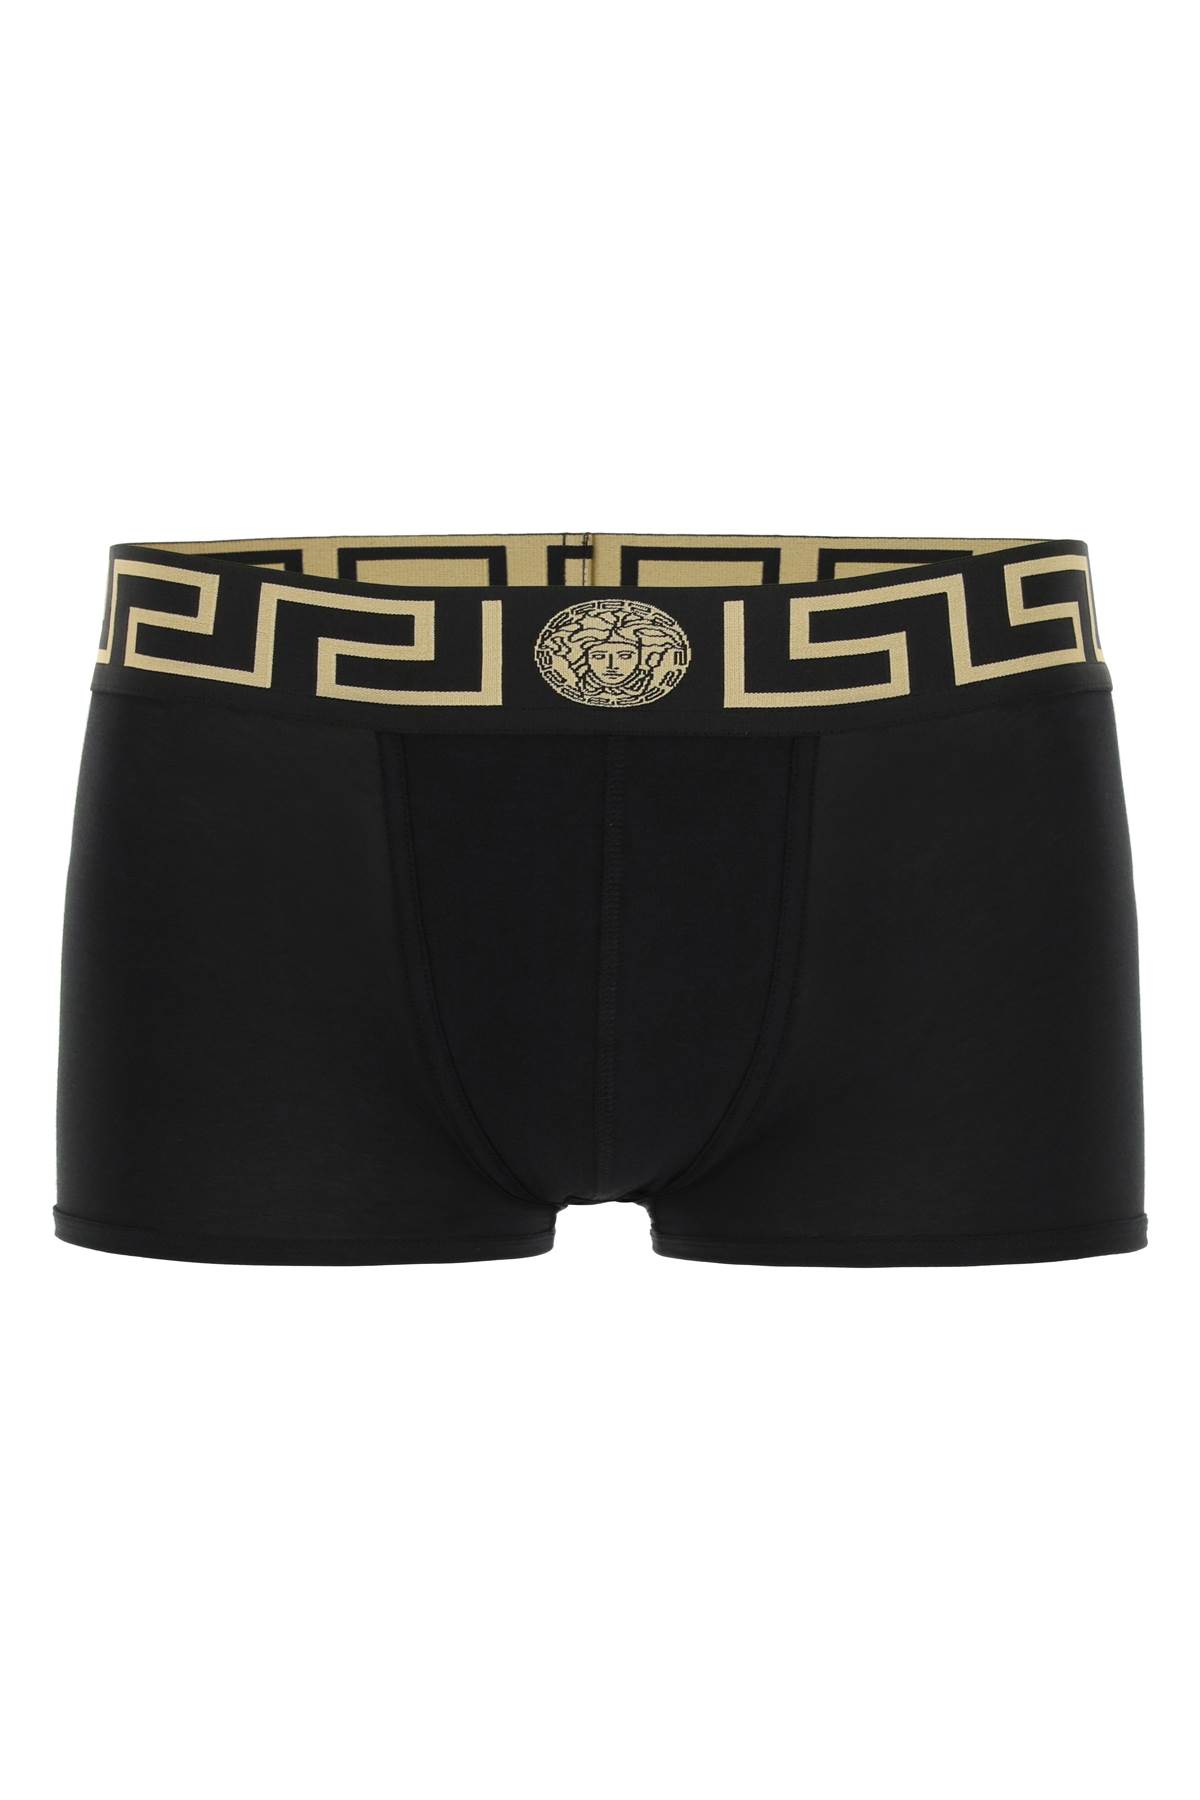 Versace Greca Border Underwear Trunks